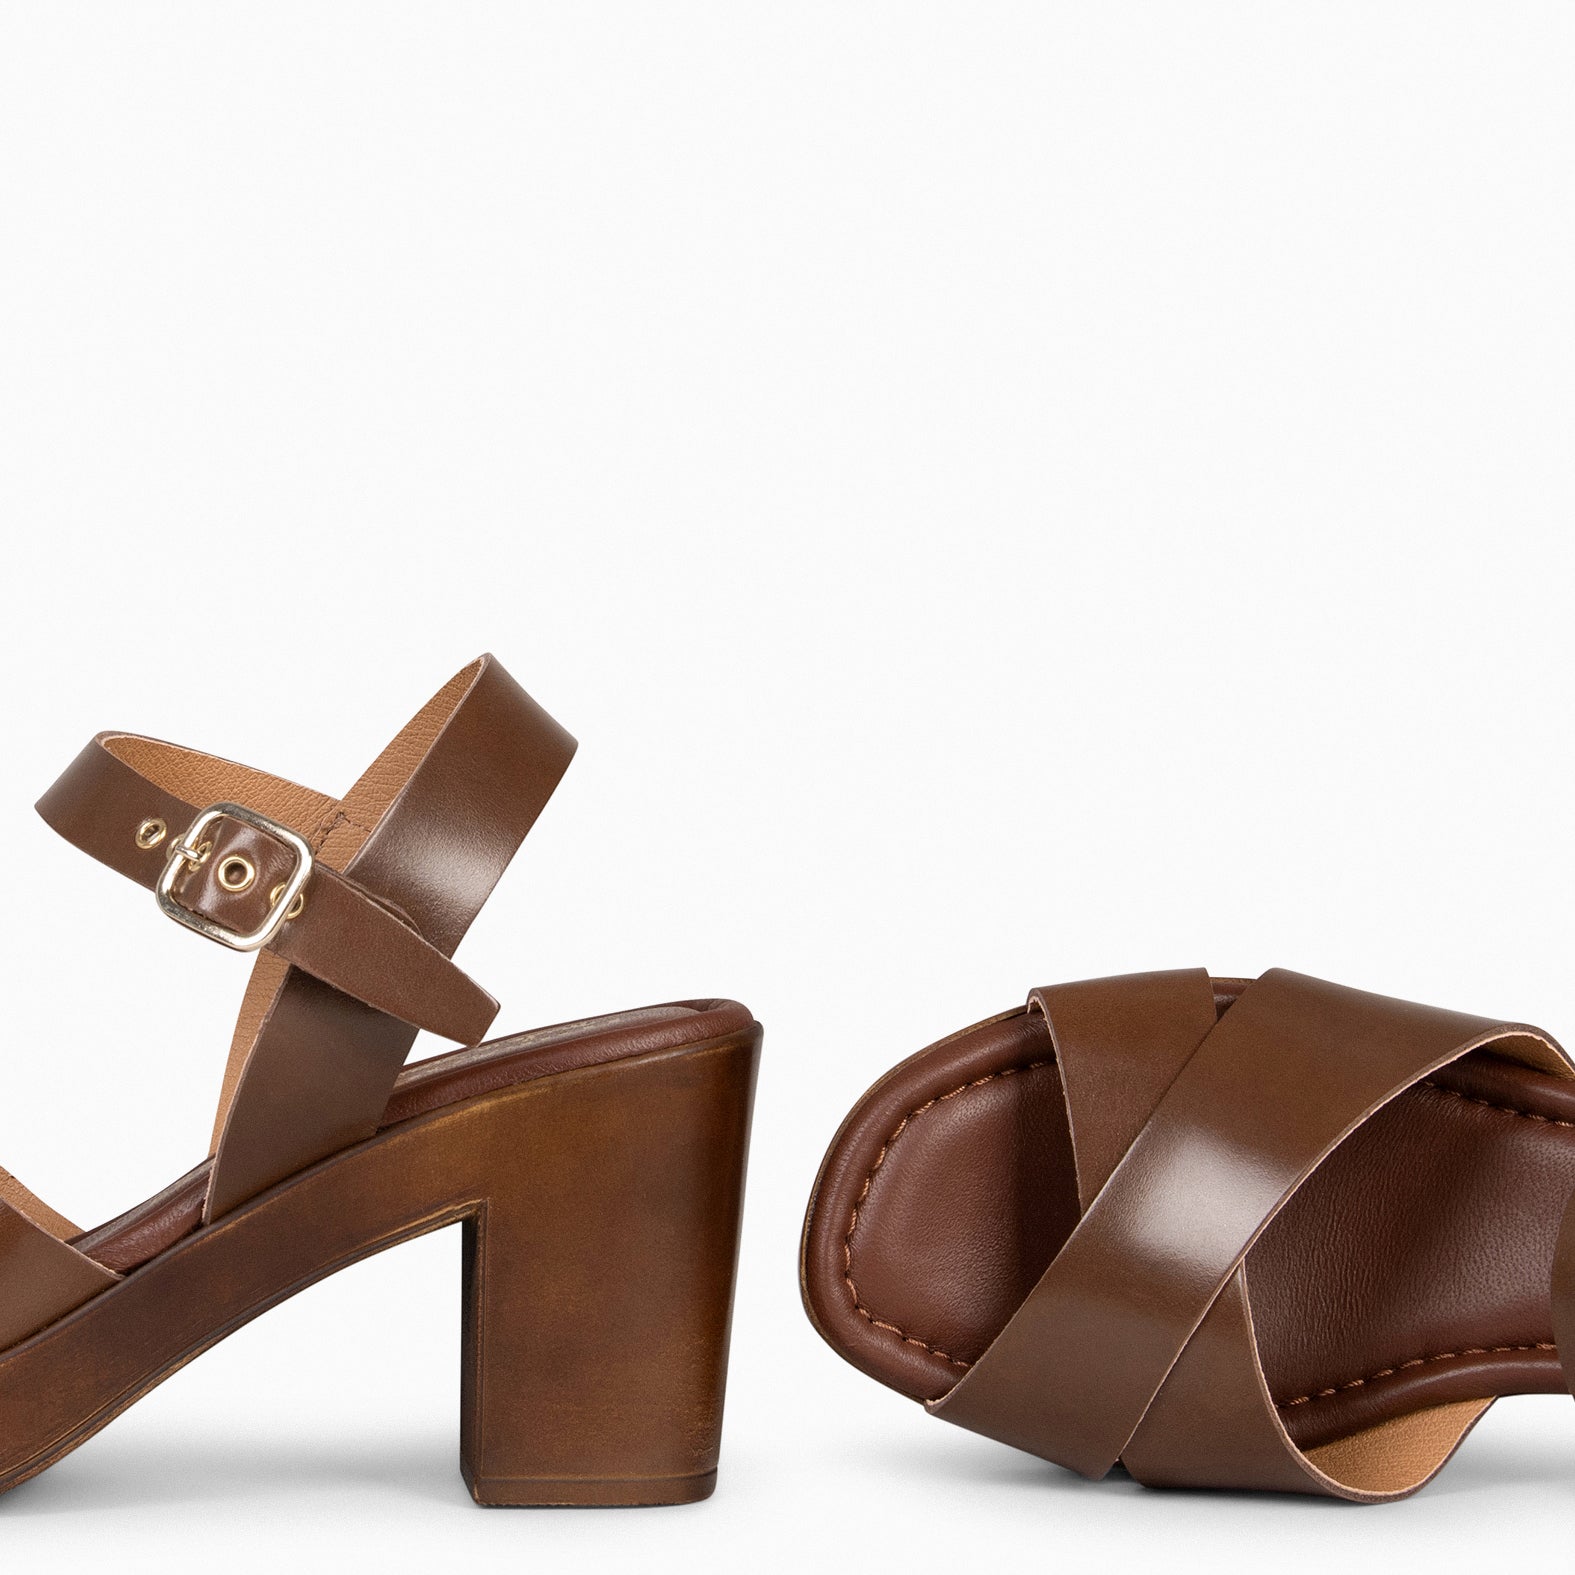 TAVIRA – BROWN wide-heeled sandal